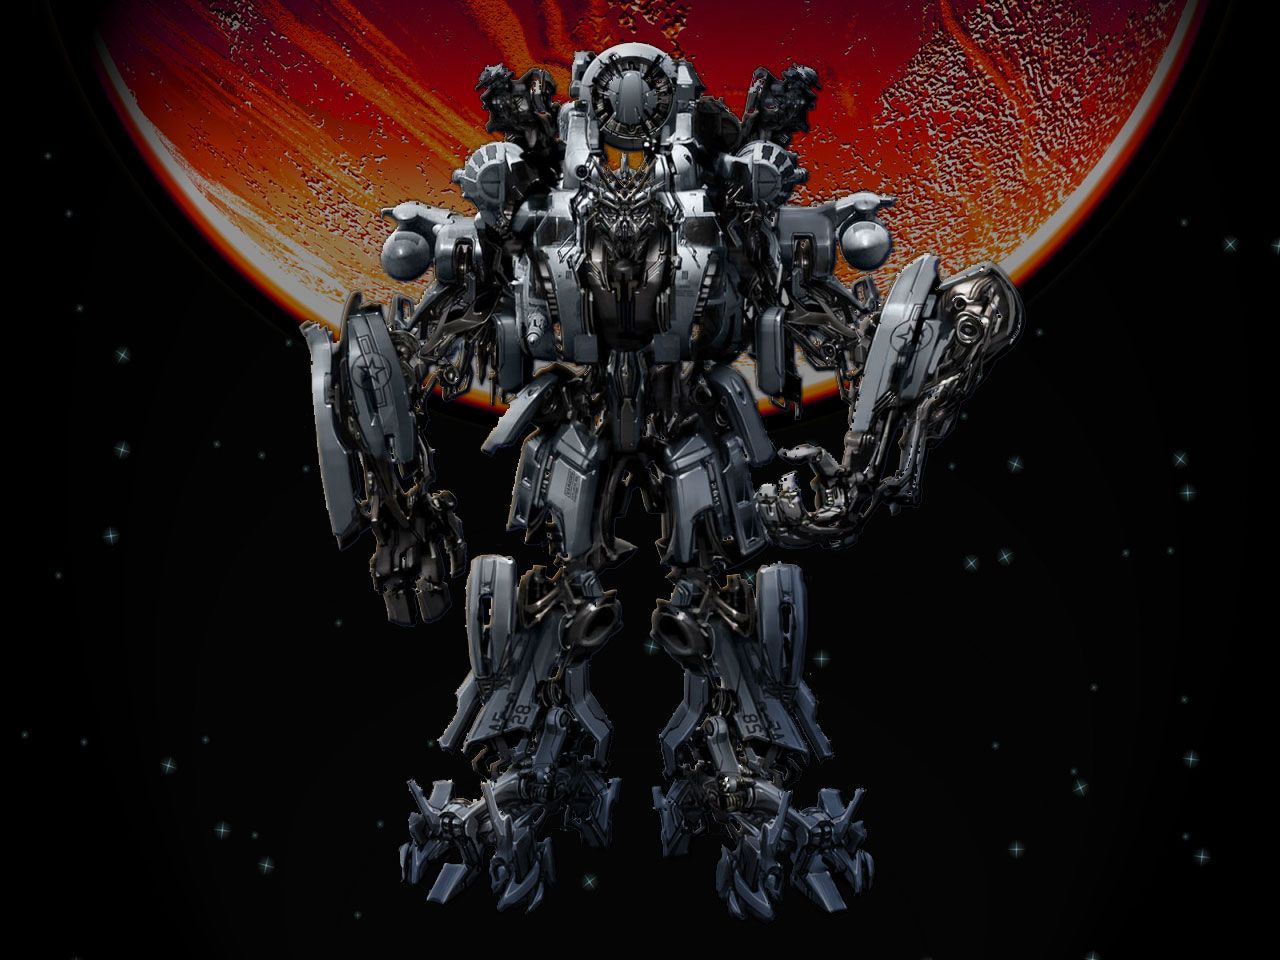 Transformers Movie BlackOut, 1280 x 960pix wallpaper Science Fiction, 3D Digital Art